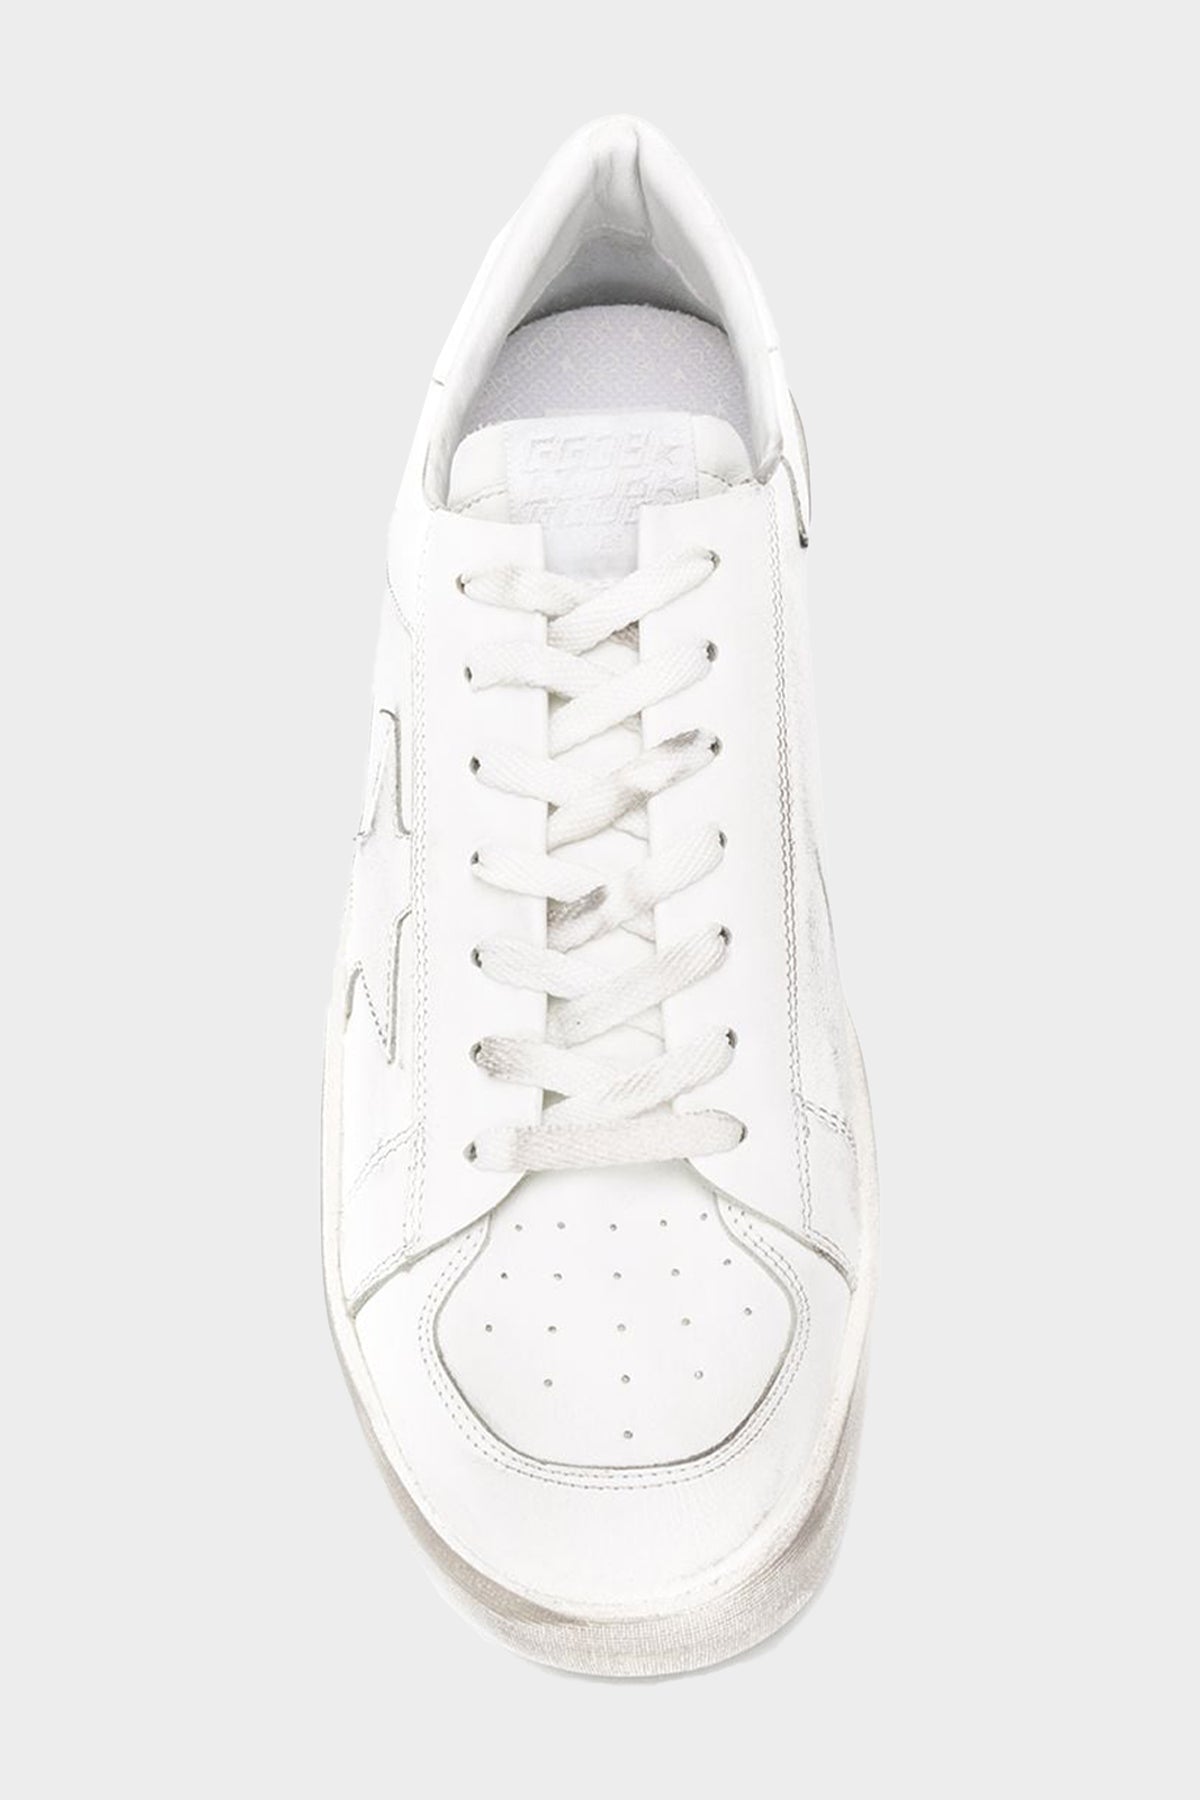 Stardan Optic White Leather Men Sneaker - shop-olivia.com